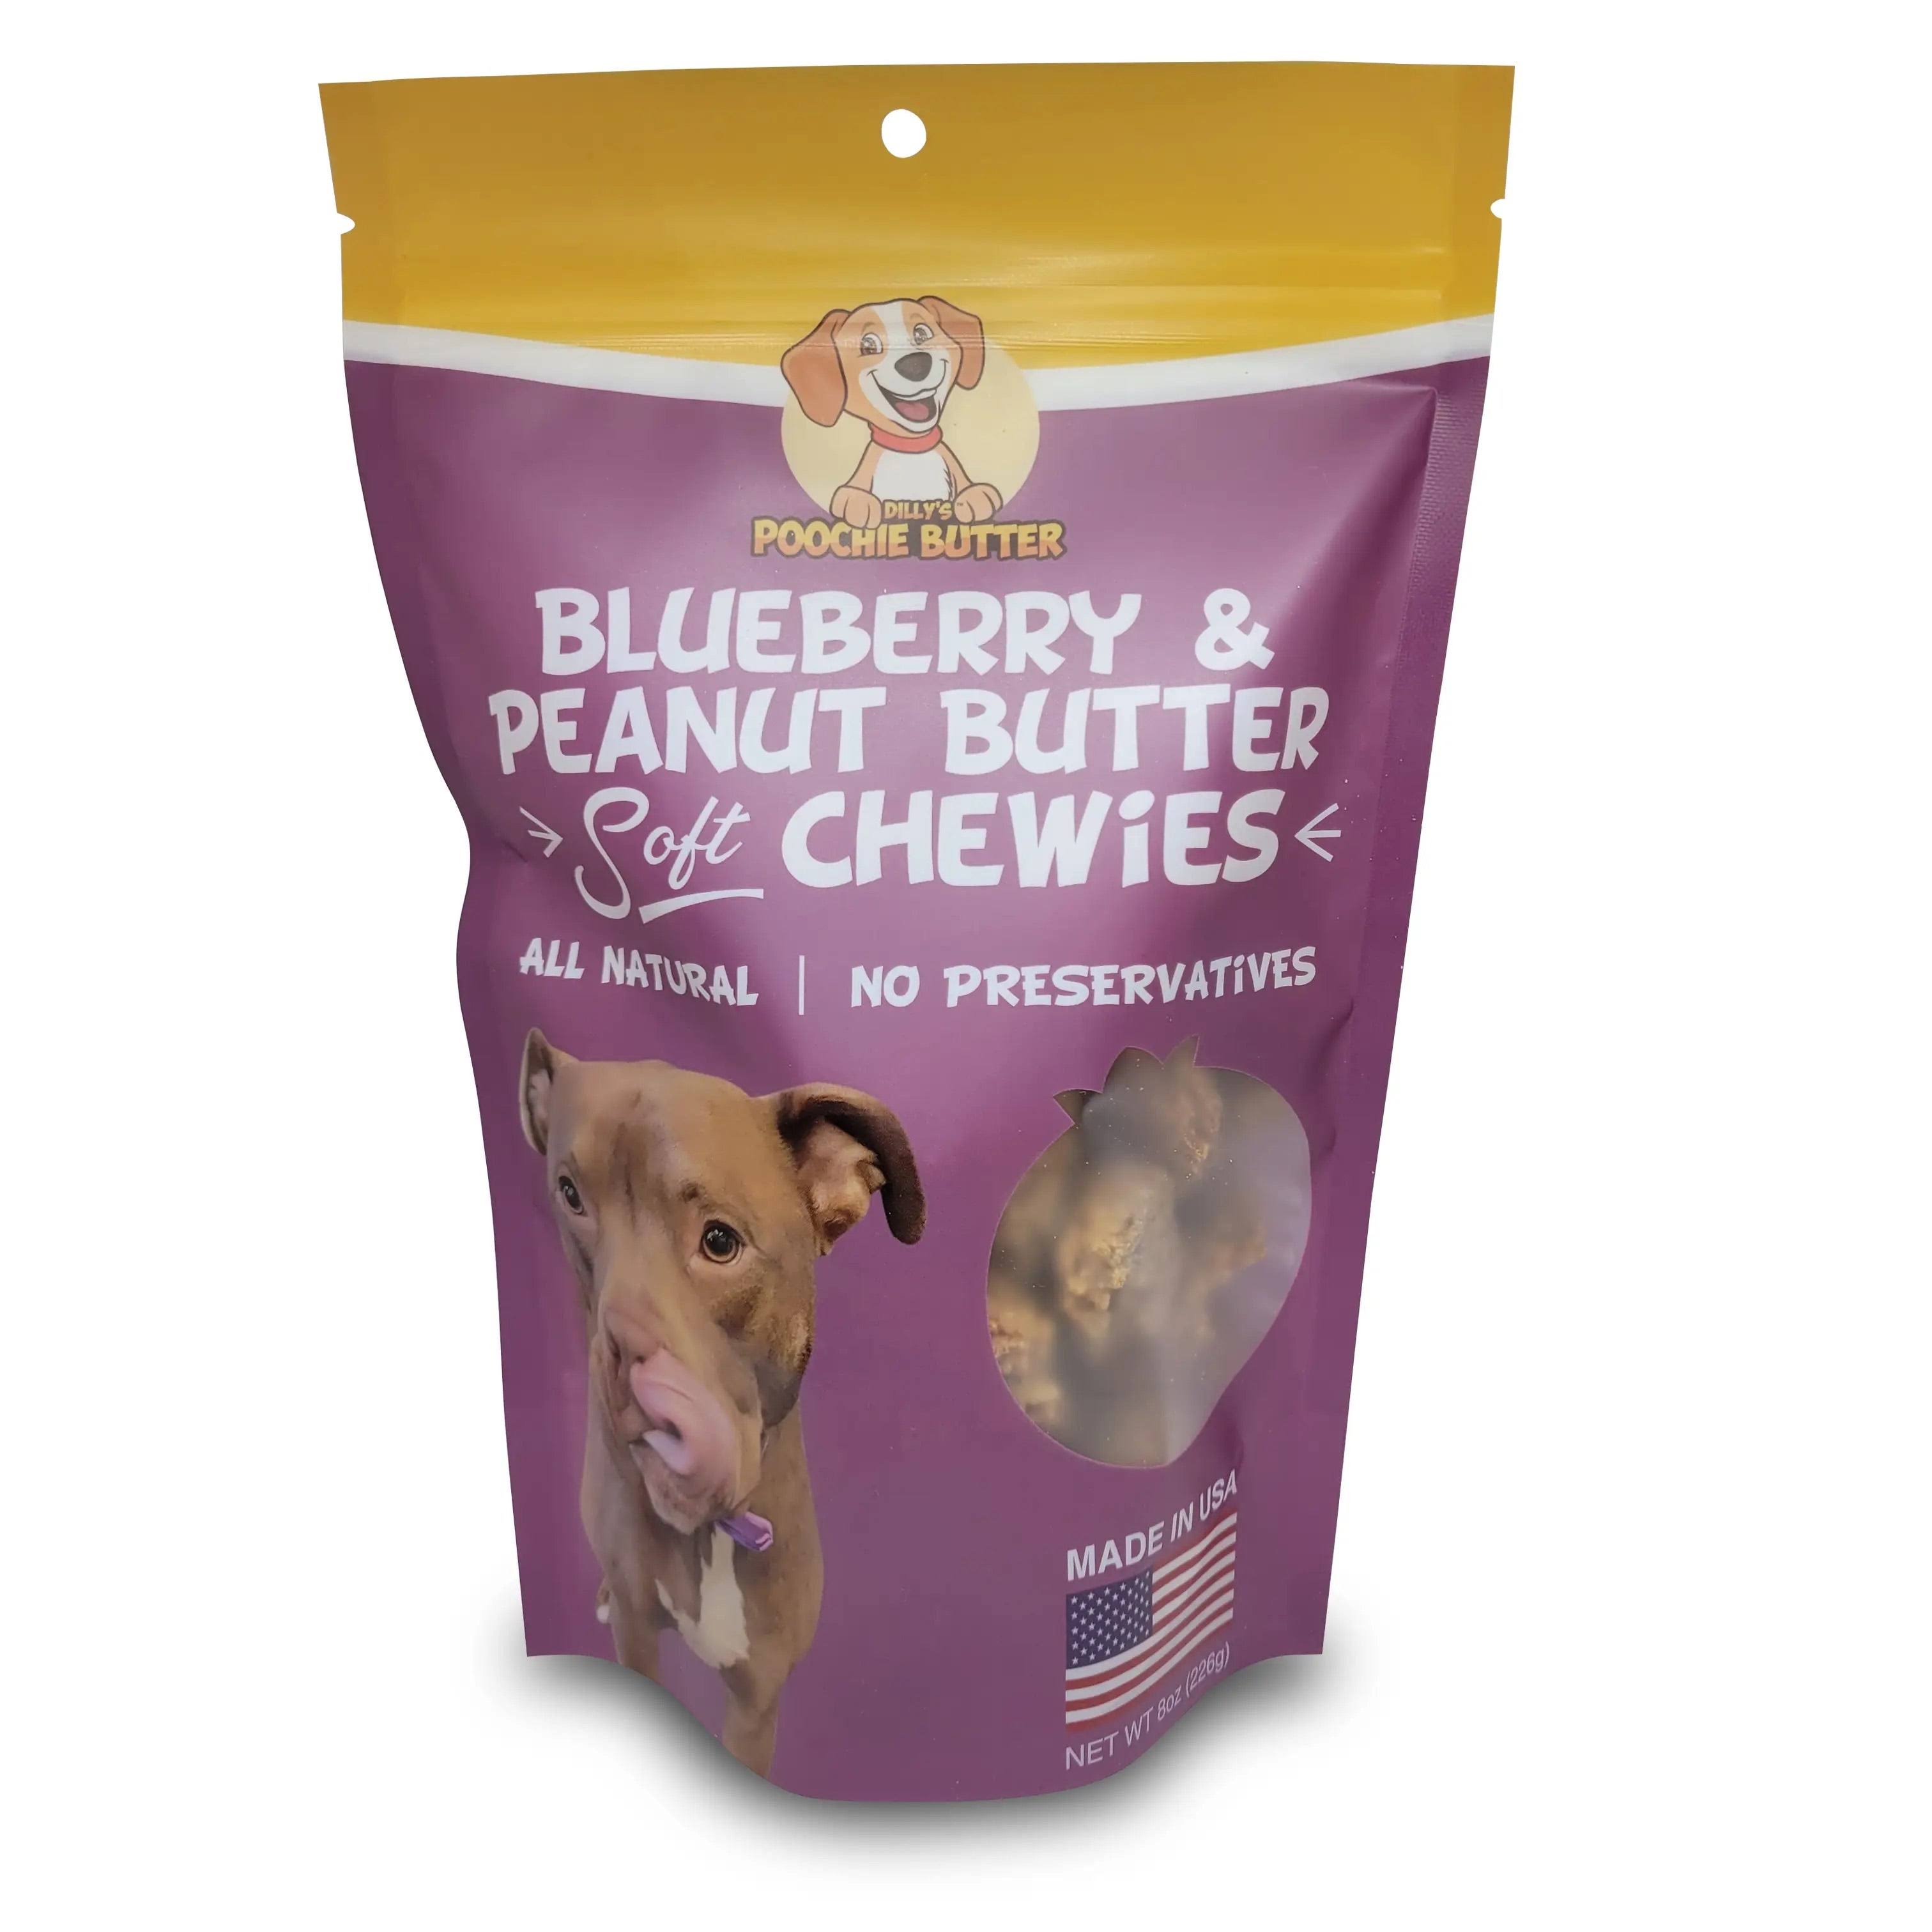 Poochie Butter Peanut Butter + Blueberry Soft Chewies